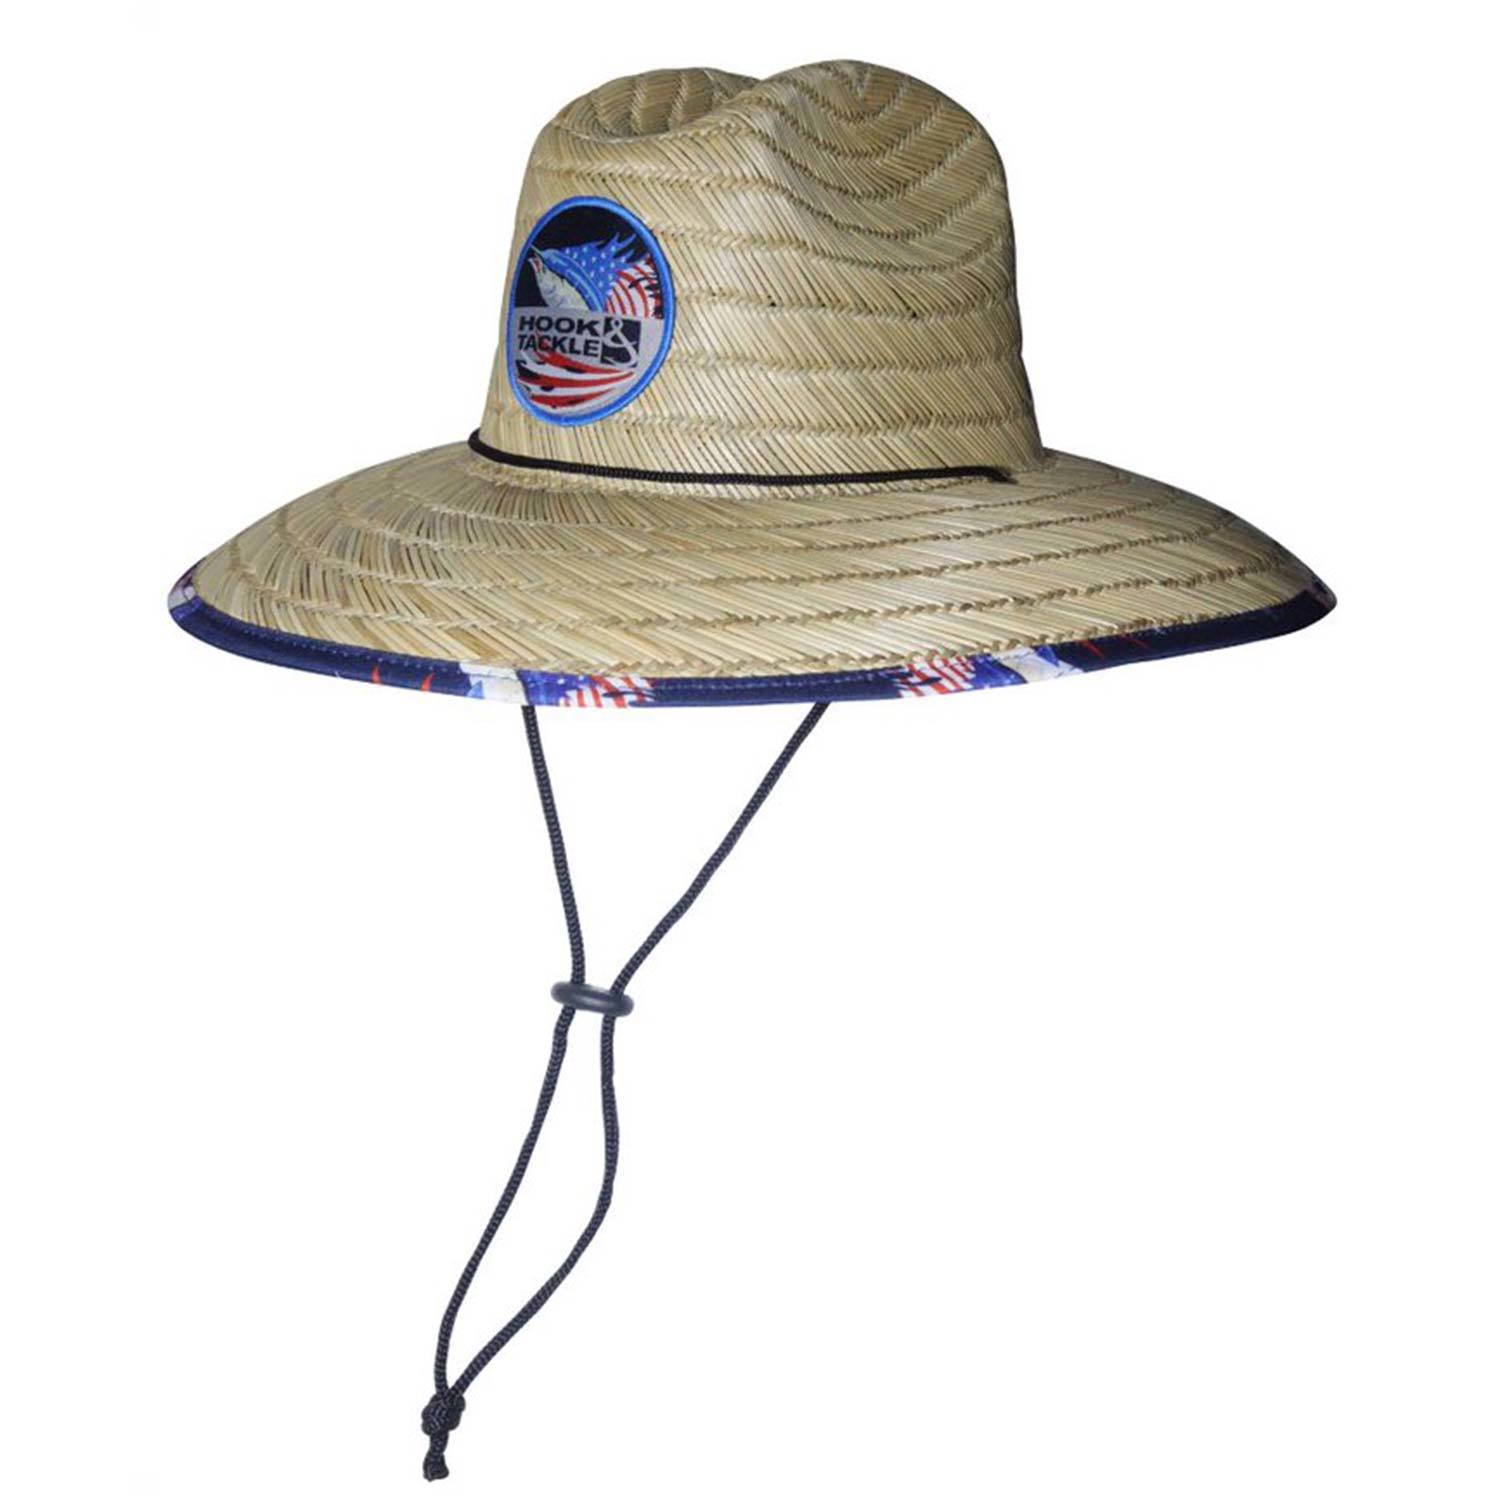 HOOK & TACKLE Sails & Stripes Lifeguard Straw Hat | West Marine